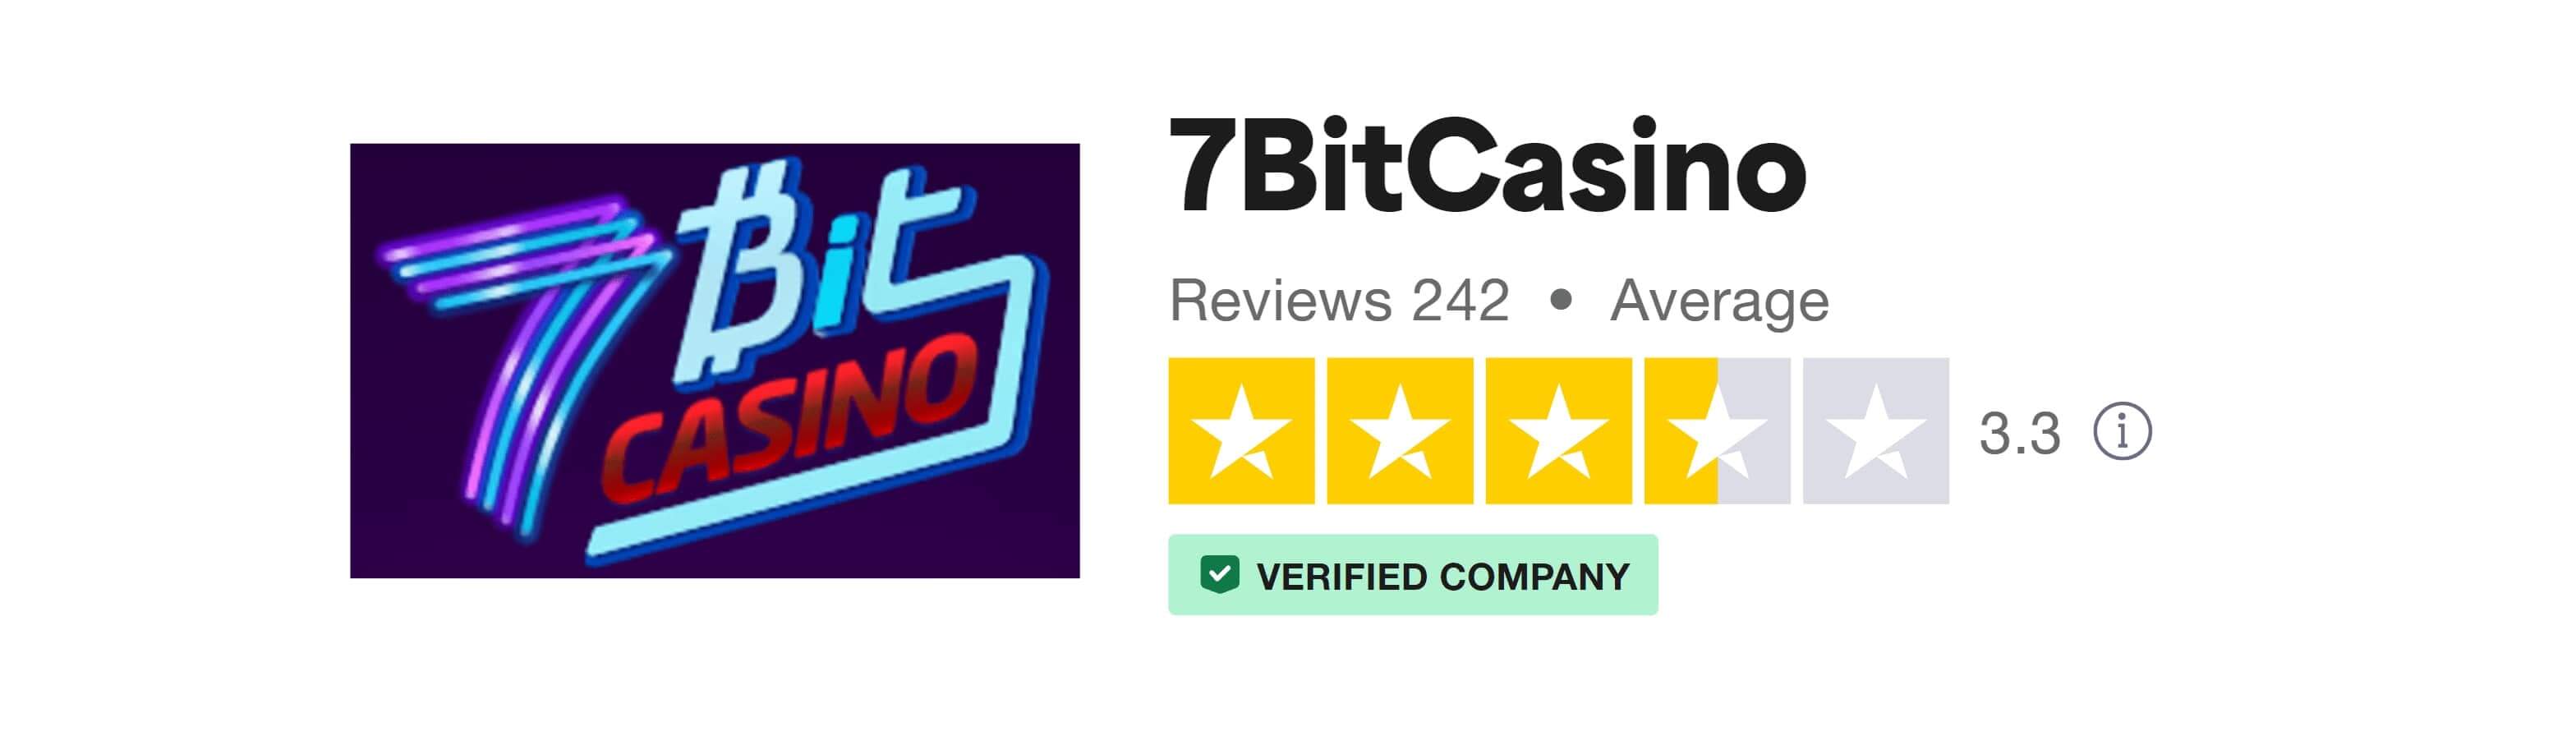 Trustpilot rating screenshot for the 7Bit